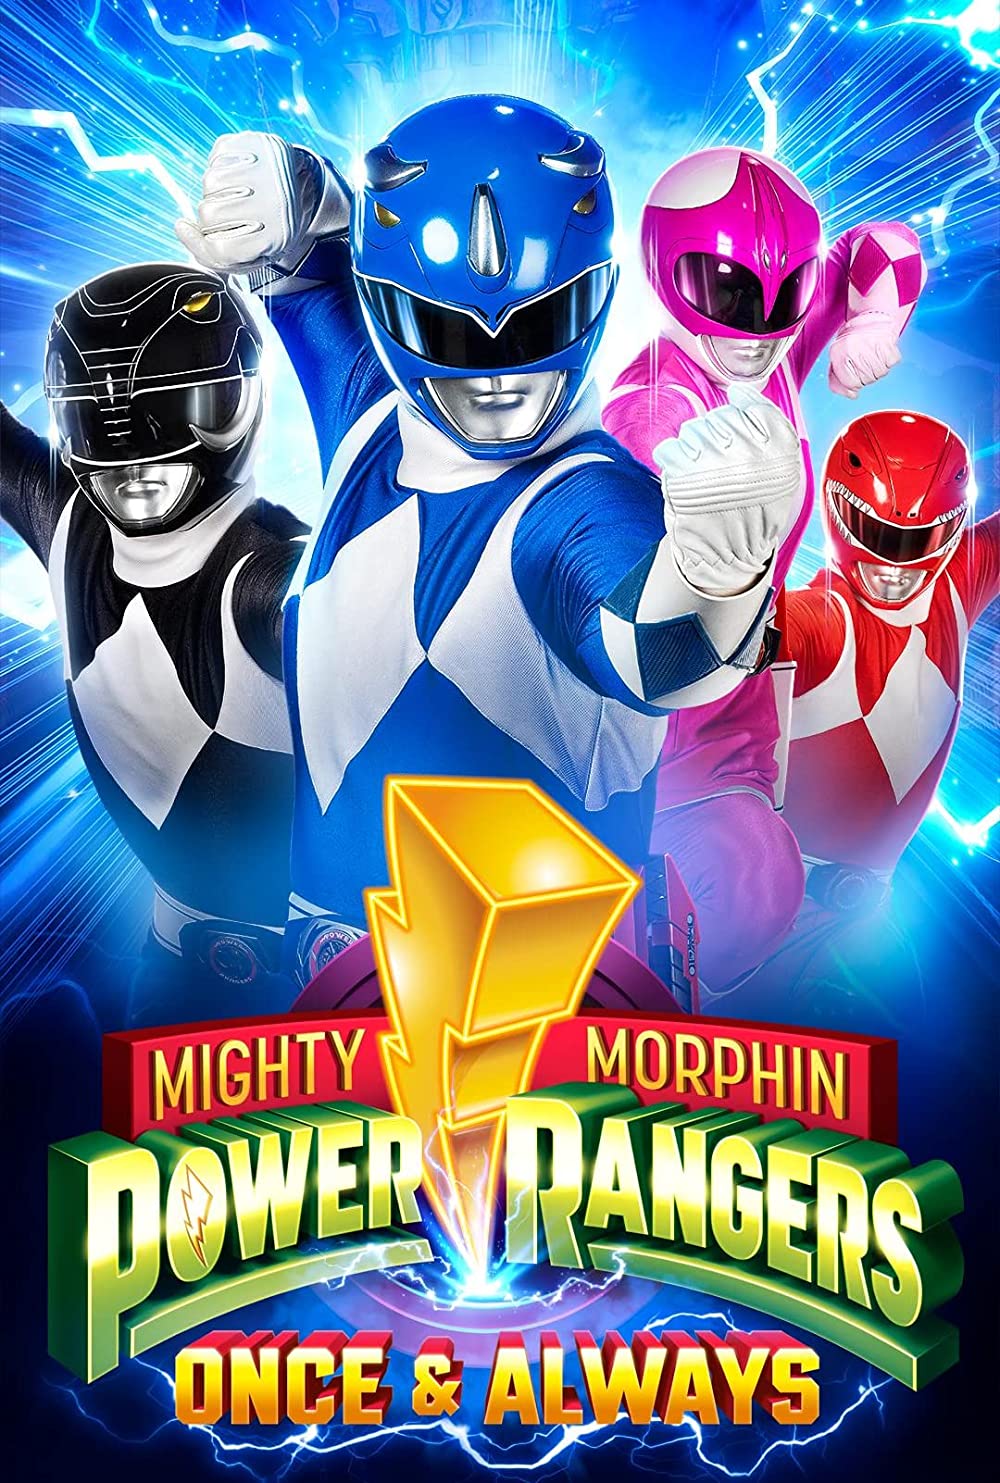 Banner Phim Power Rangers: Một Lần và Mãi Mãi (Mighty Morphin Power Rangers Once and Always)